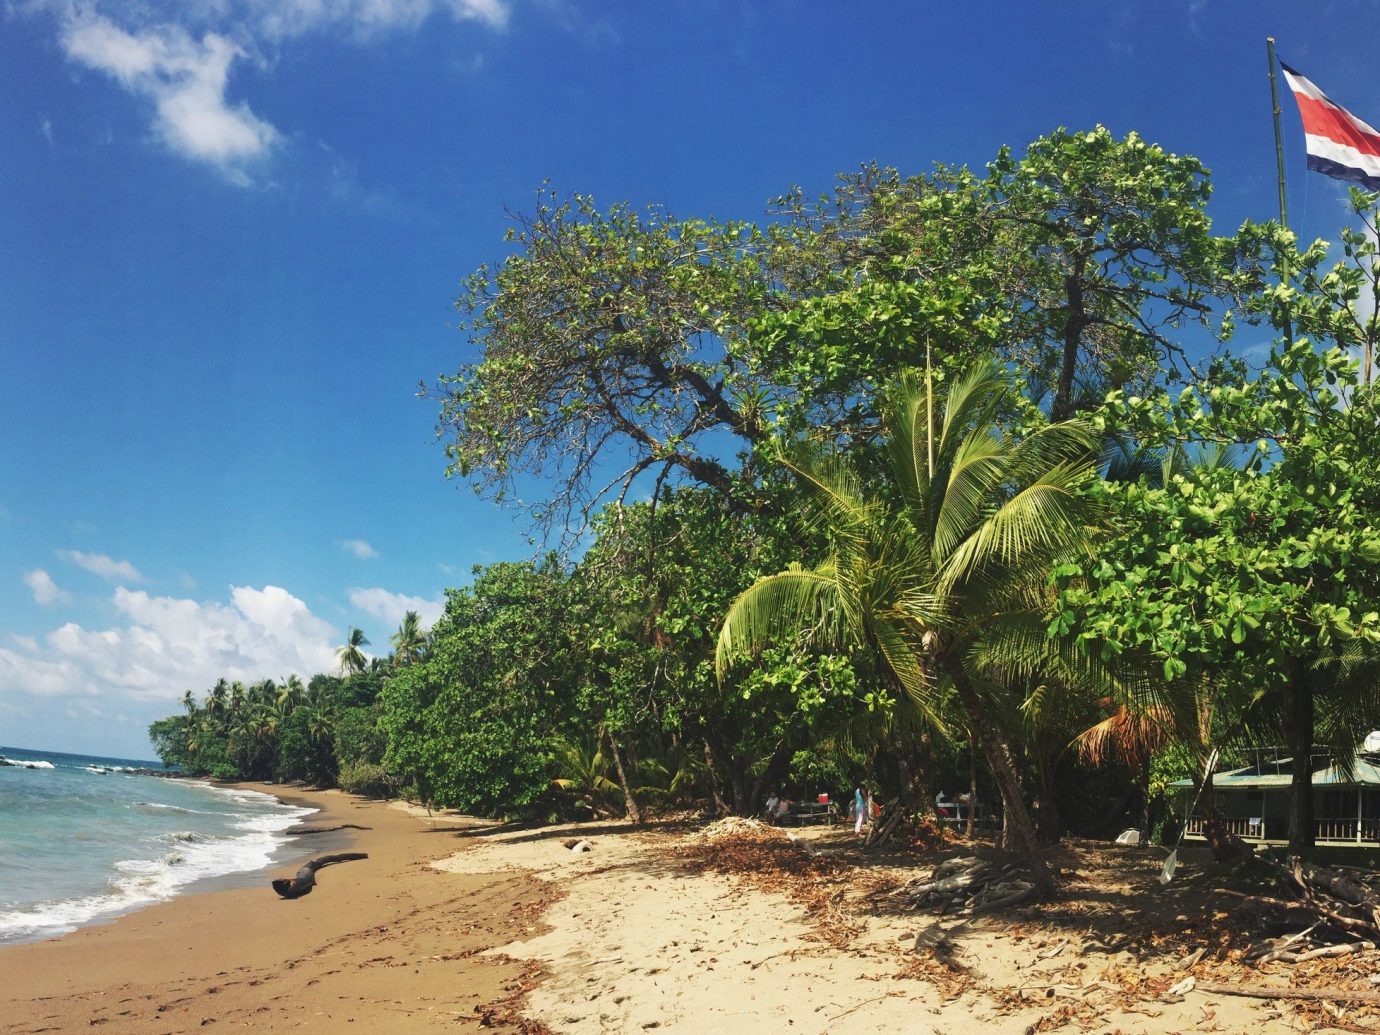 Beach on the Osa Peninsula in Costa Rica